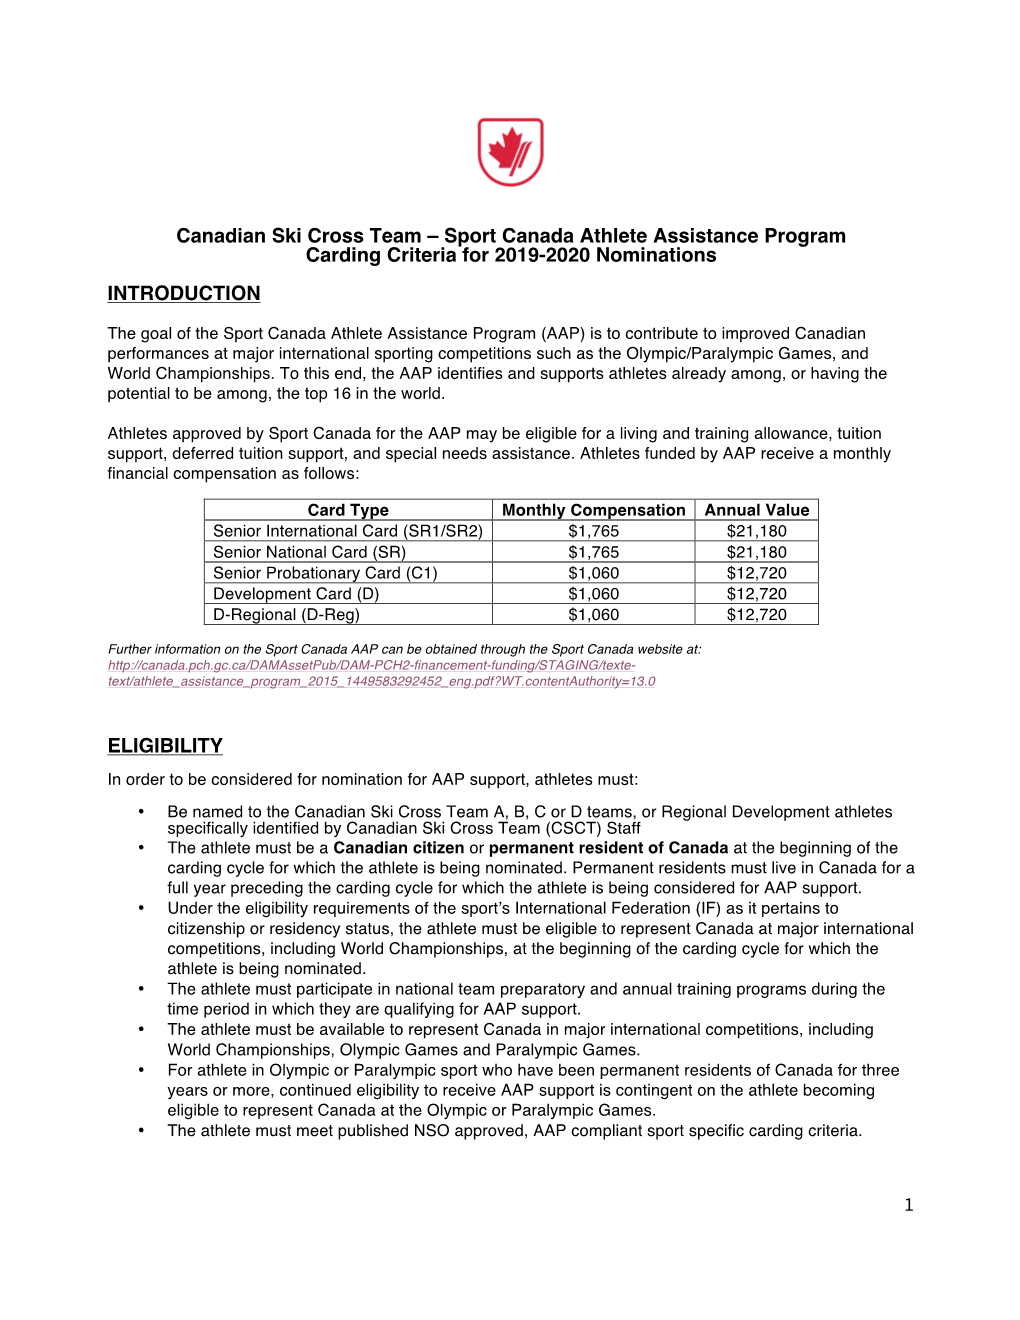 Sport Canada Athlete Assistance Program Carding Criteria for 2019-2020 Nominations